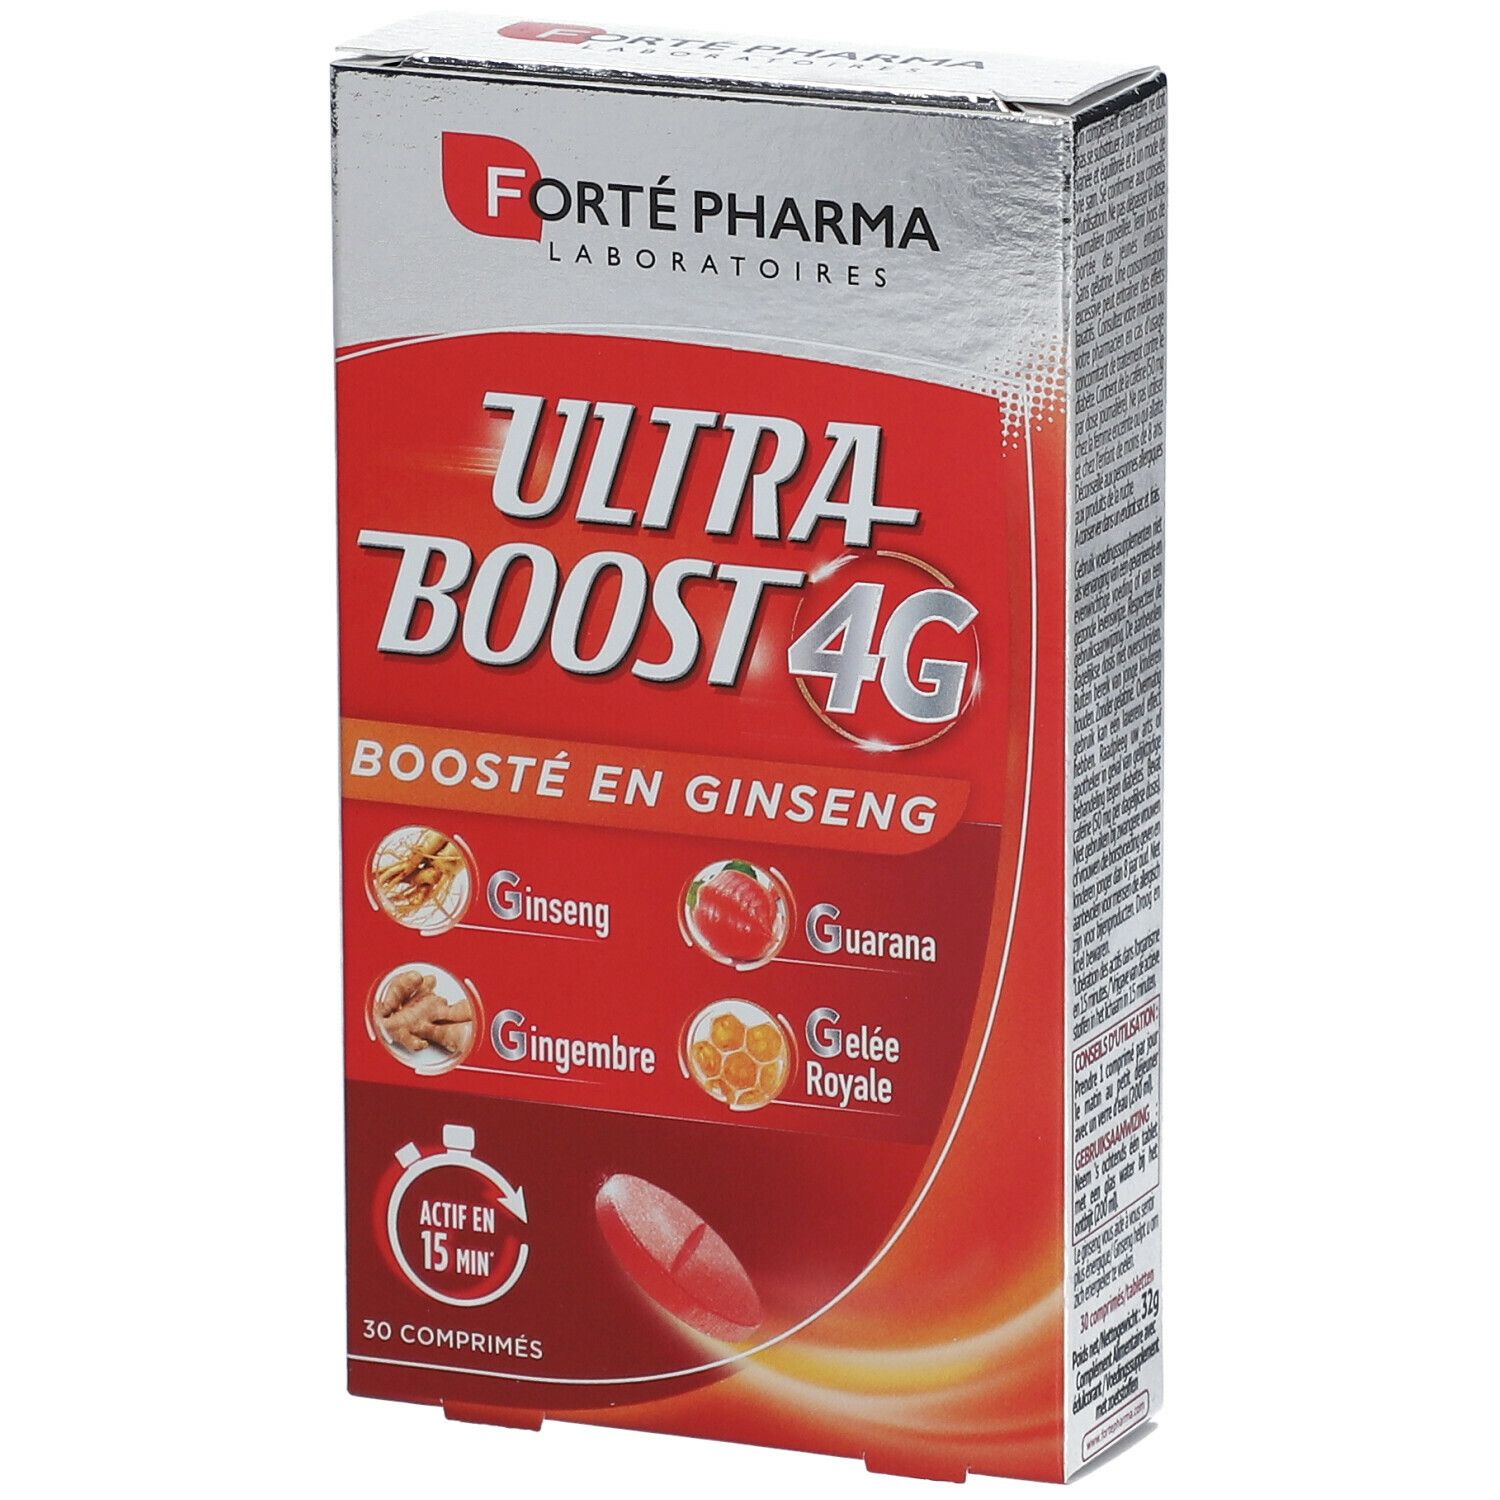 Forté Pharma Vitalité 4G Ultra Boost + Ginseng